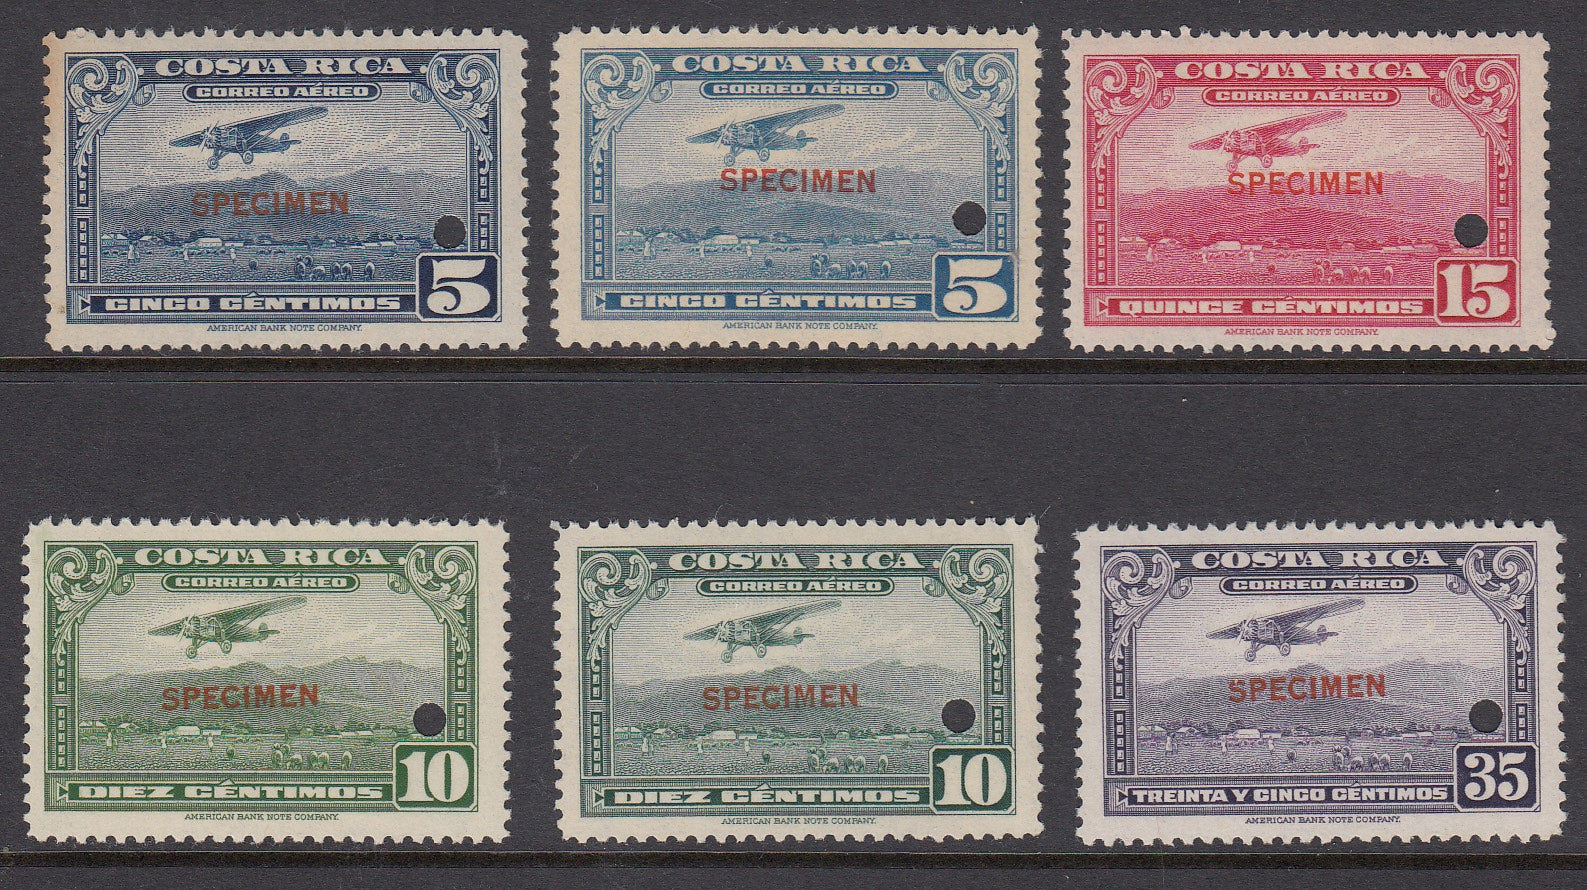 Costa Rica 1952-53 Airmail Specimen Complete Set MNH. Scott C216-C219 + shades